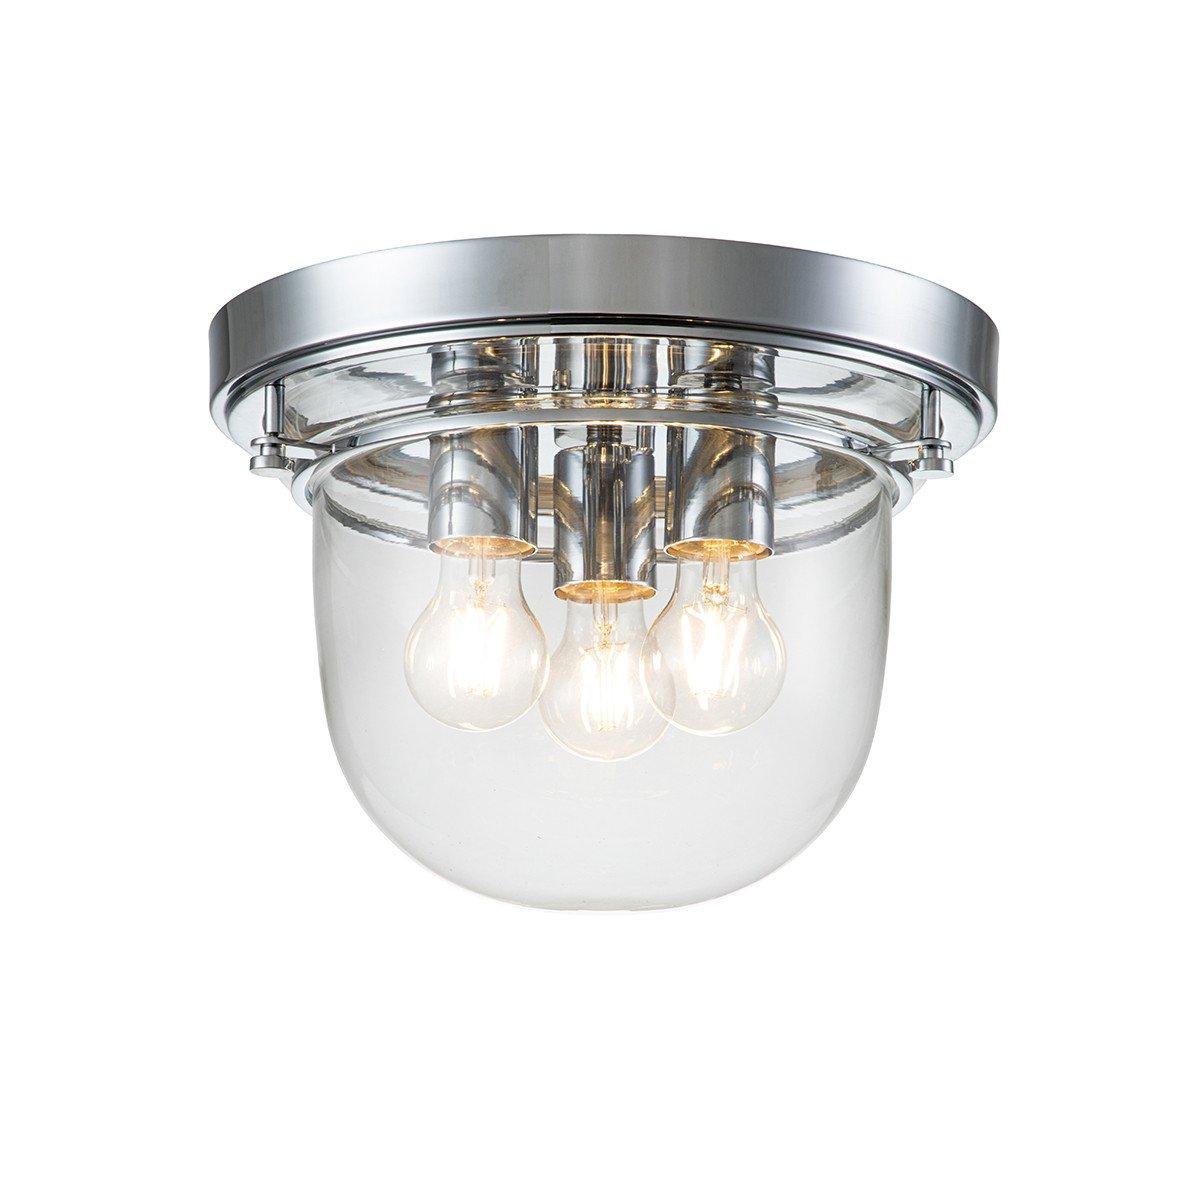 Quoizel Whistling Bowl Semi Flush Ceiling Light Polished Chrome IP44